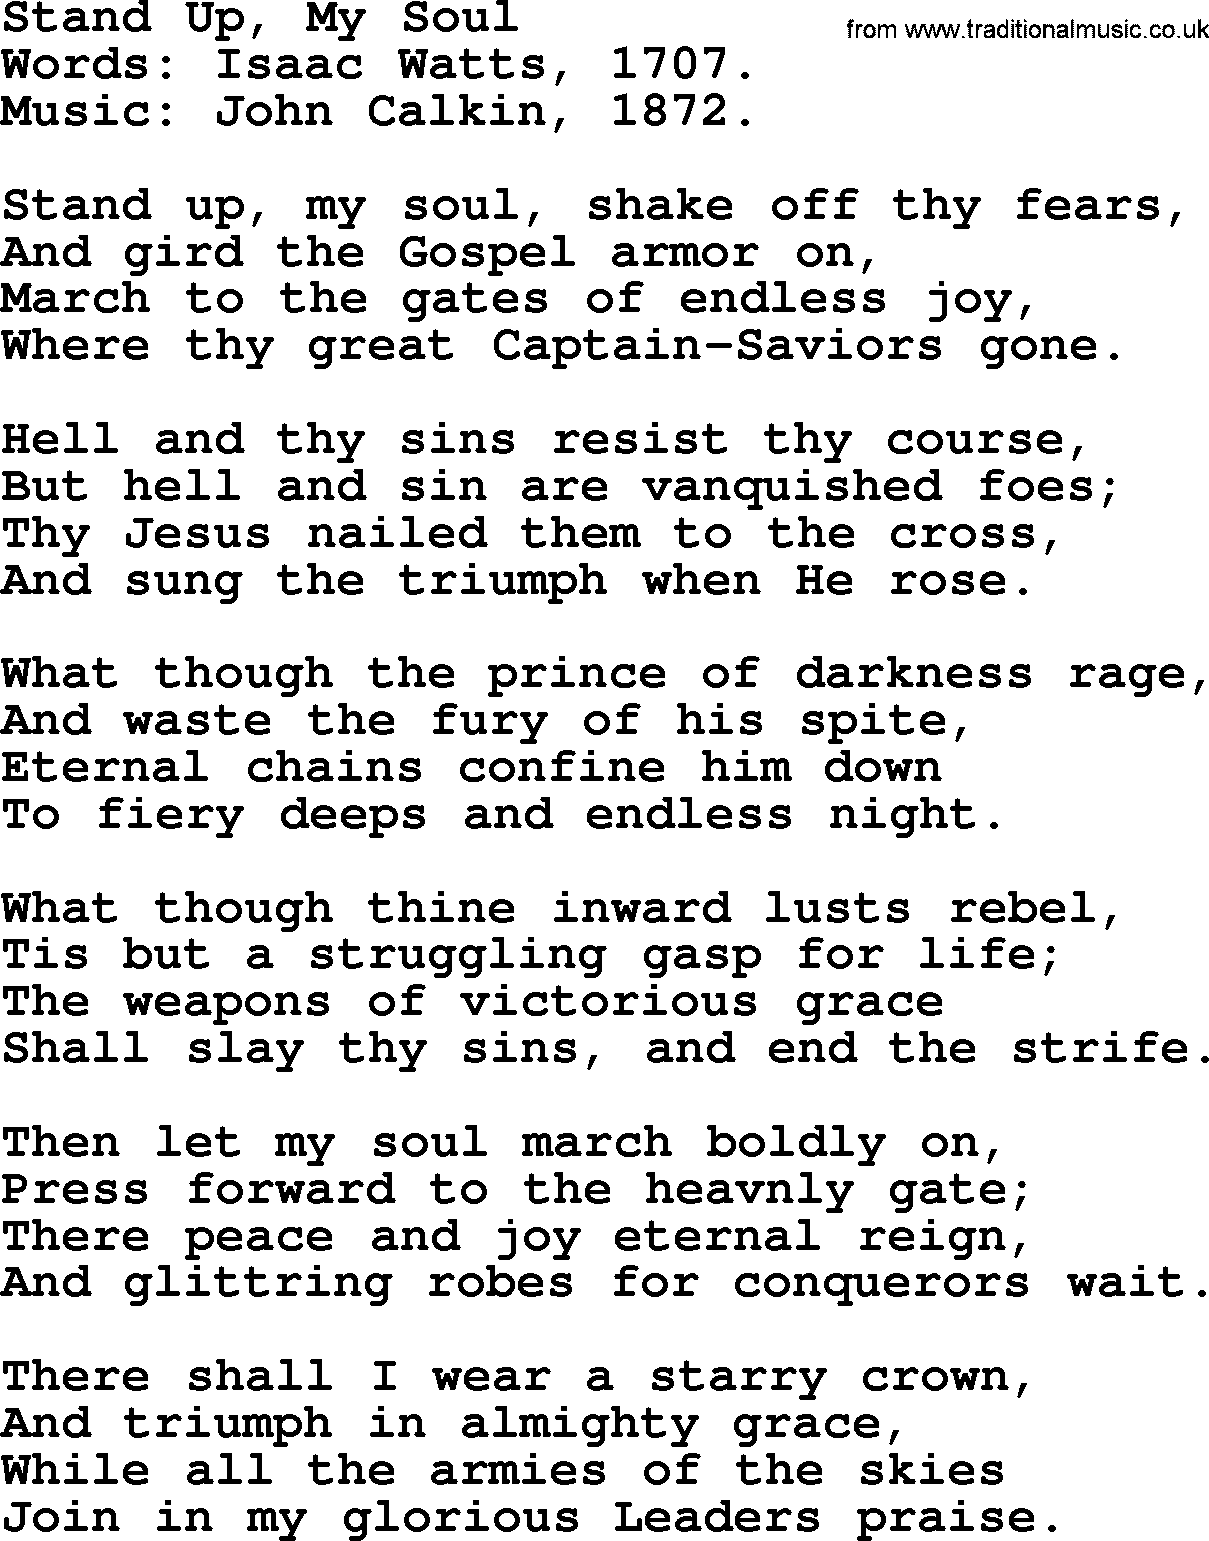 Isaac Watts Christian hymn: Stand Up, My Soul- lyricss